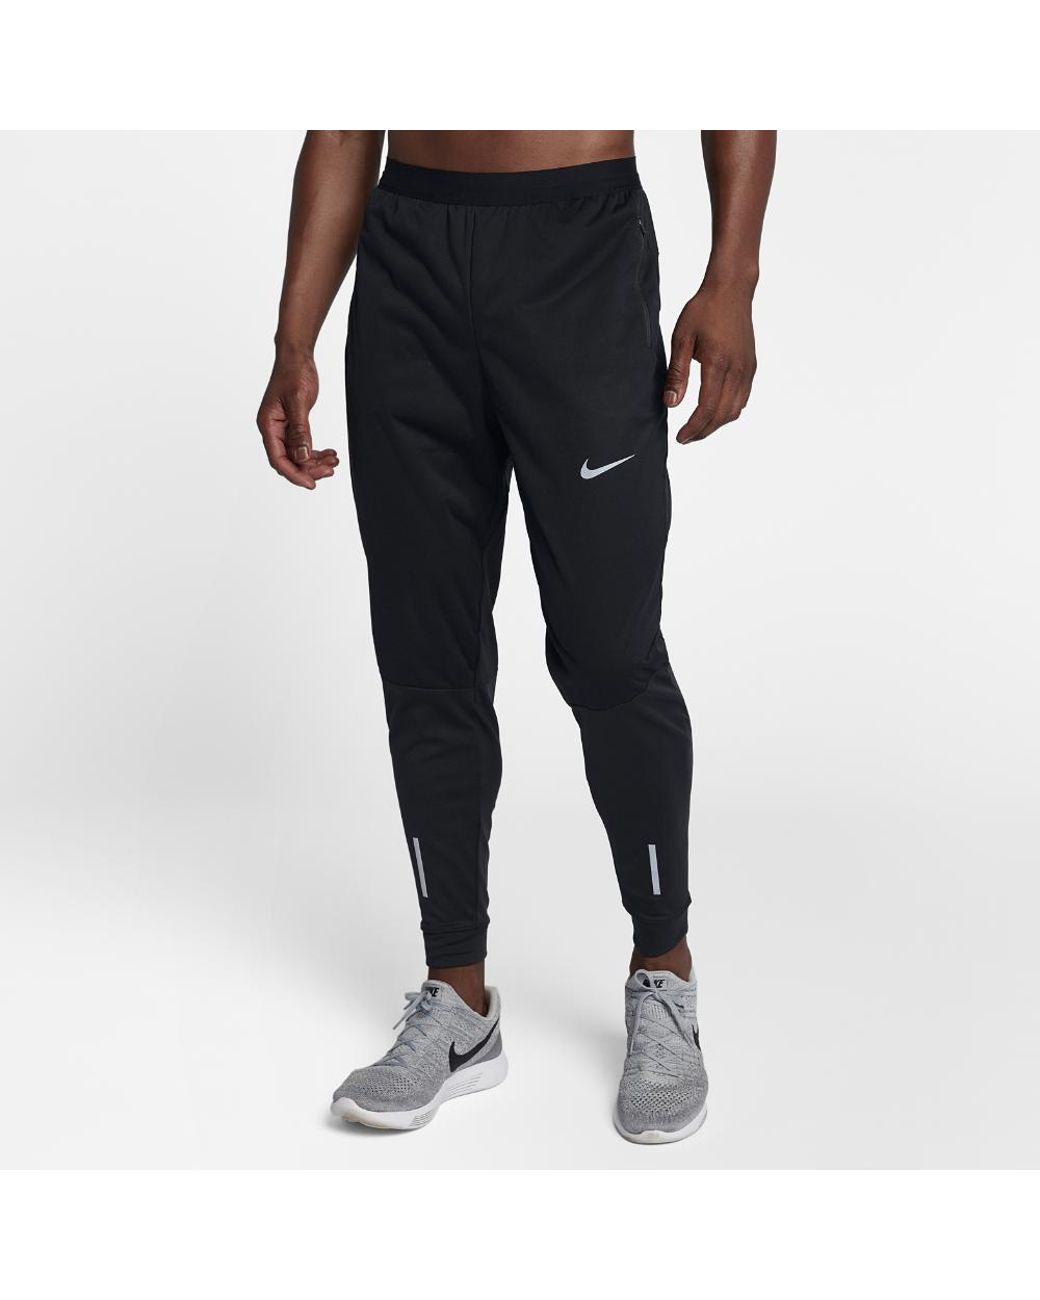 Nike Storm-FIT Run Division Phenom Men's Running Pants - Earth